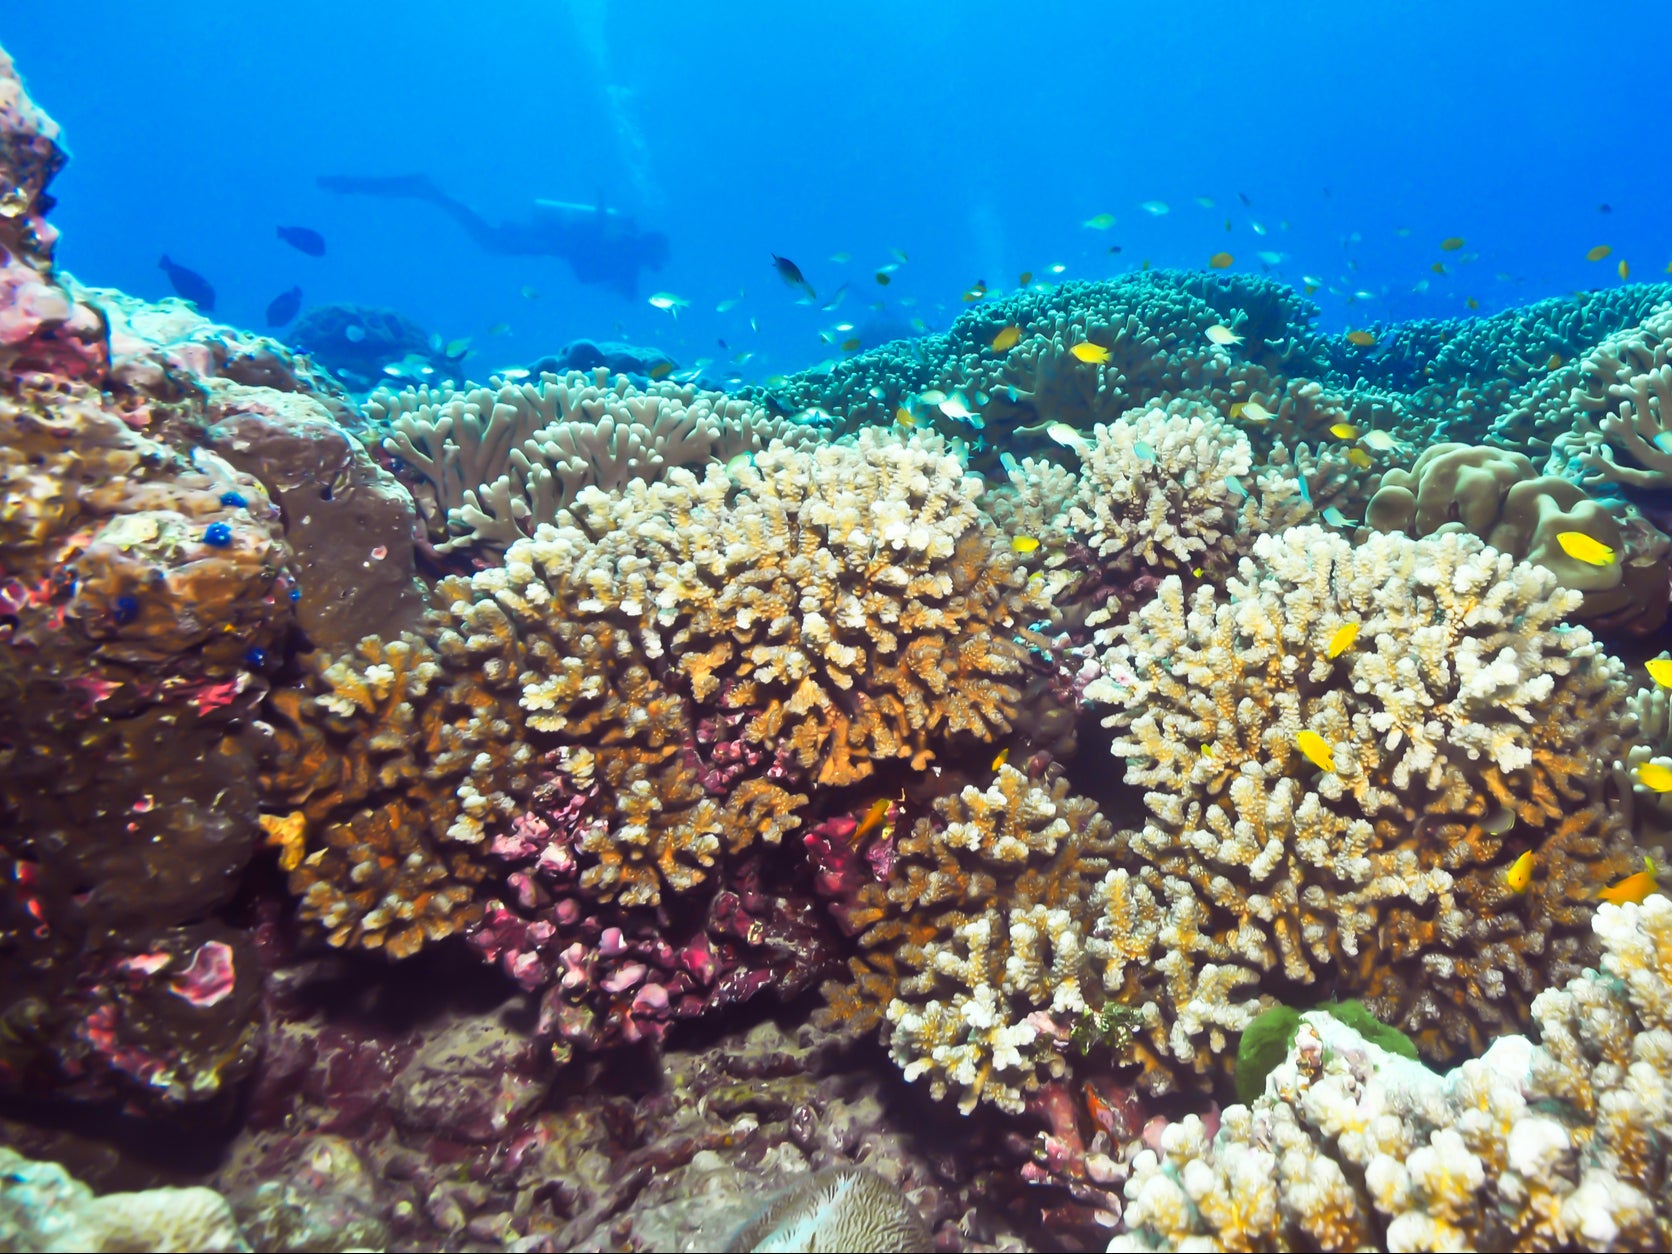 Healthy corals in the Indian Ocean